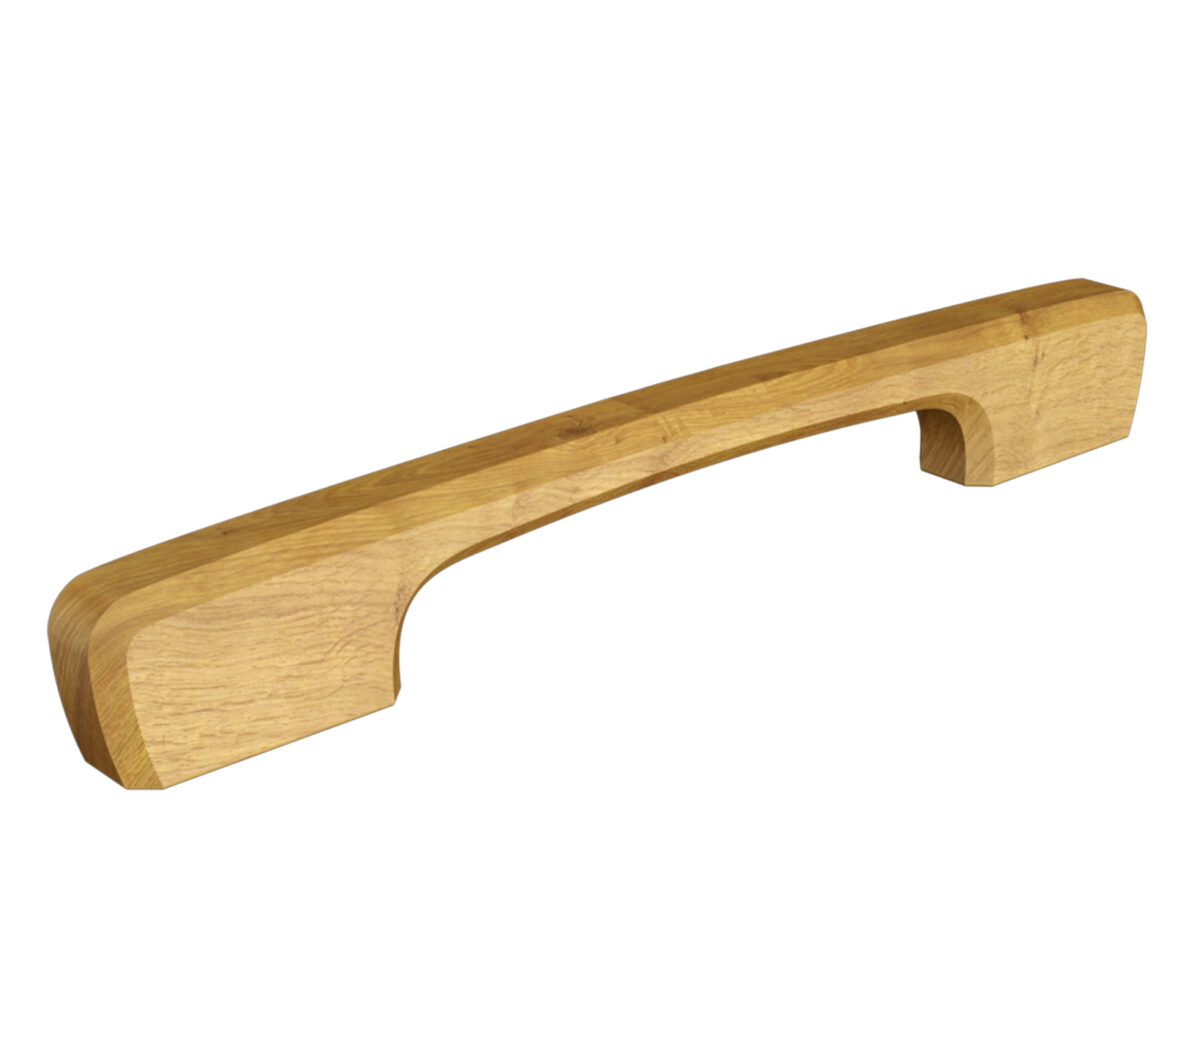 Furniture handles U-2004 made of solid wood, bevelled